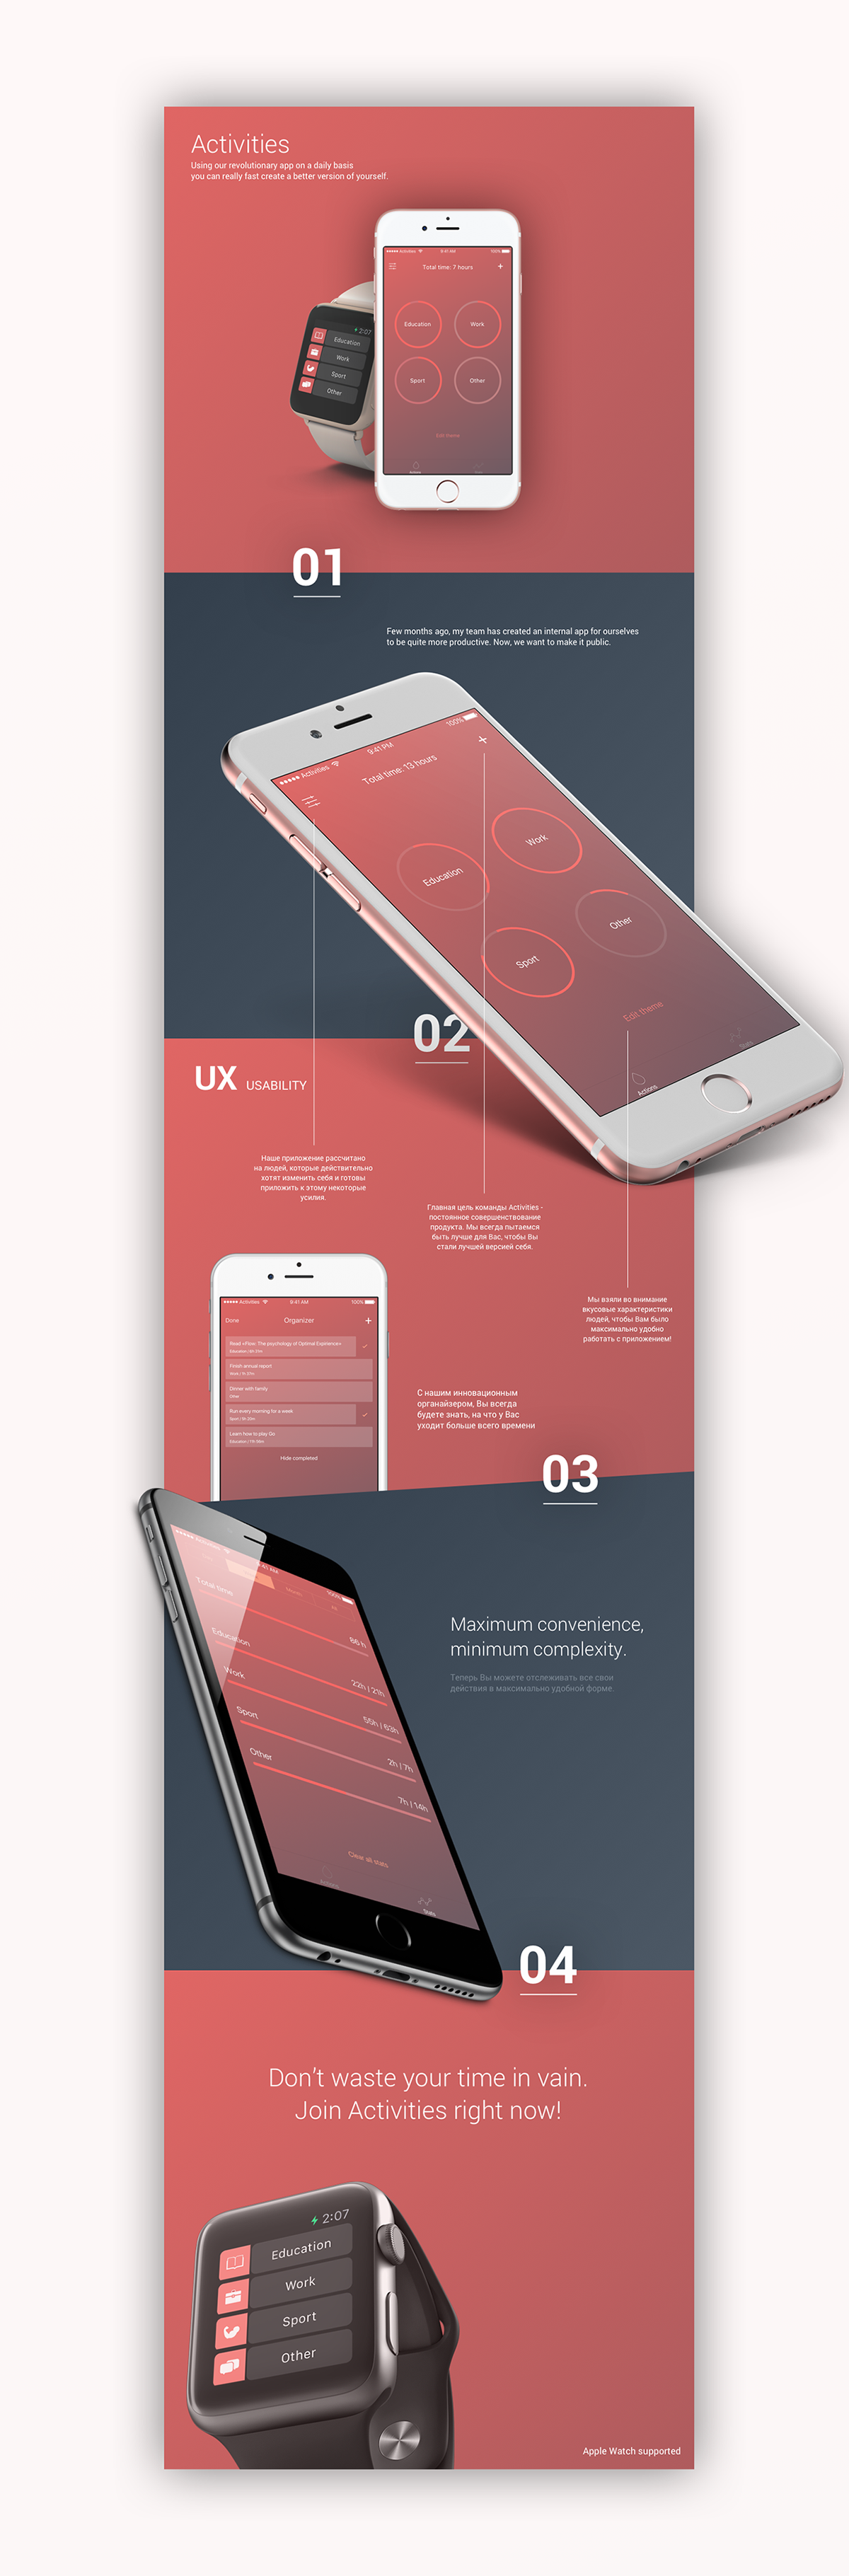 UI mobile design mobile app Mobile app ios